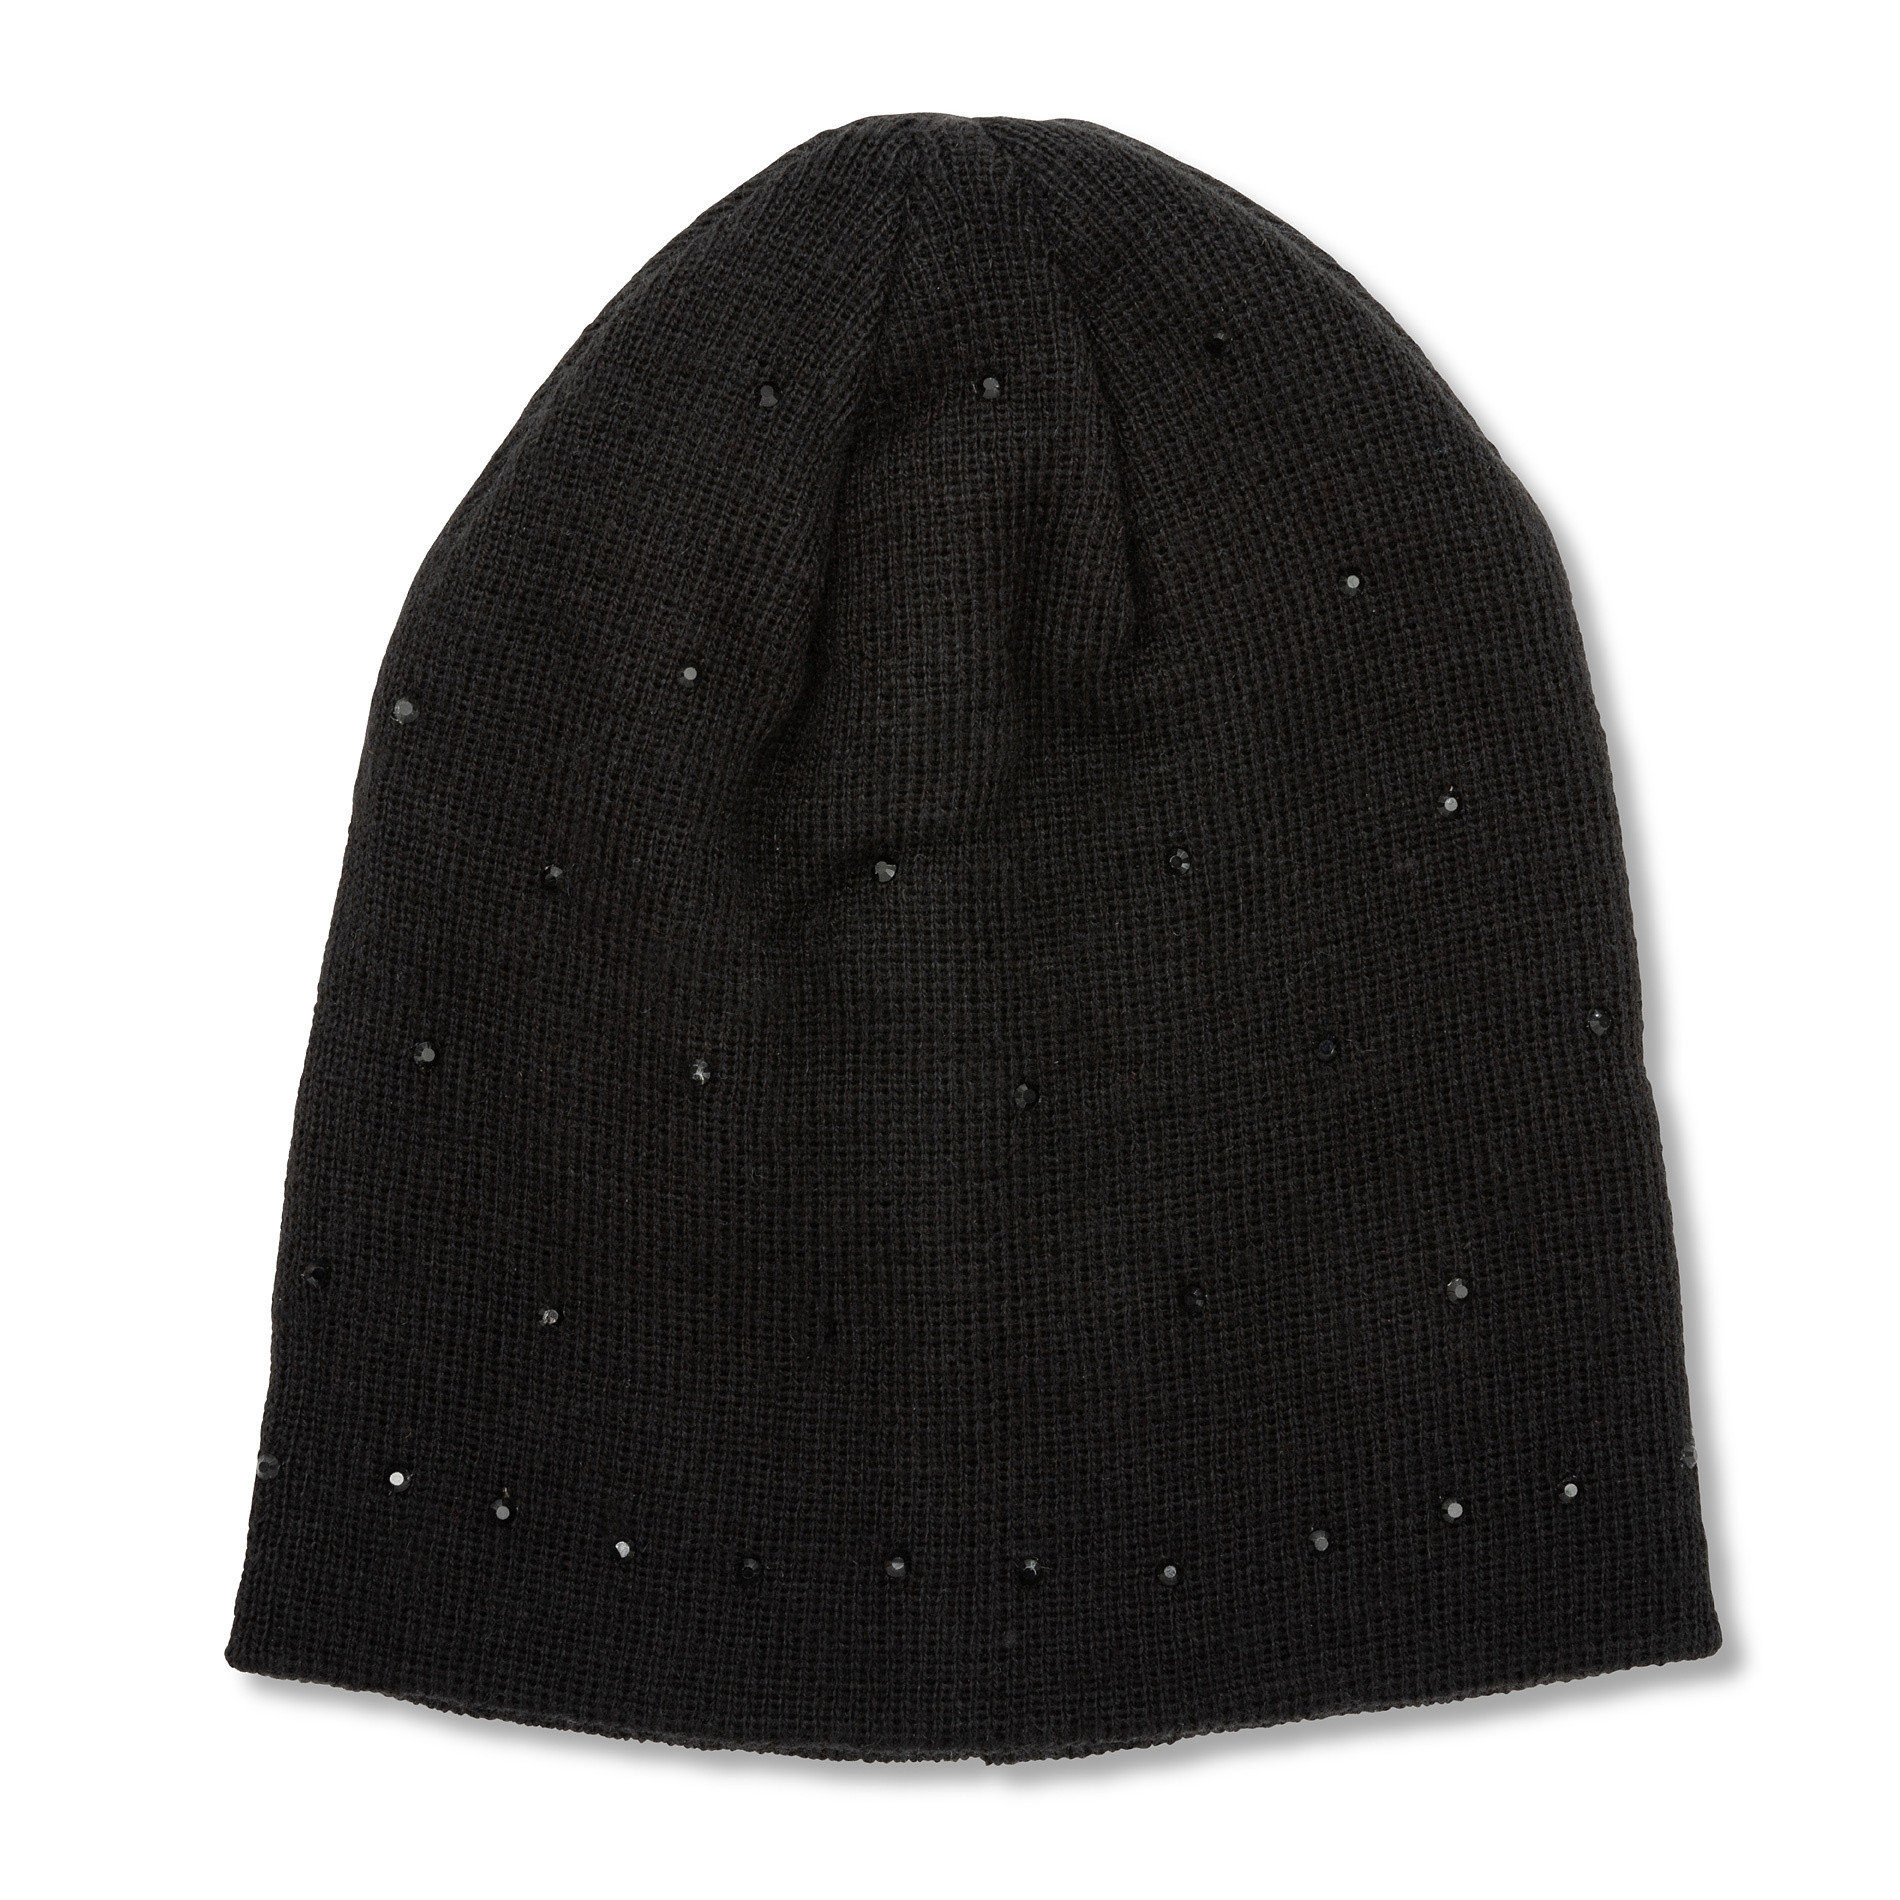 Koan hat with rhinestones, Black, large